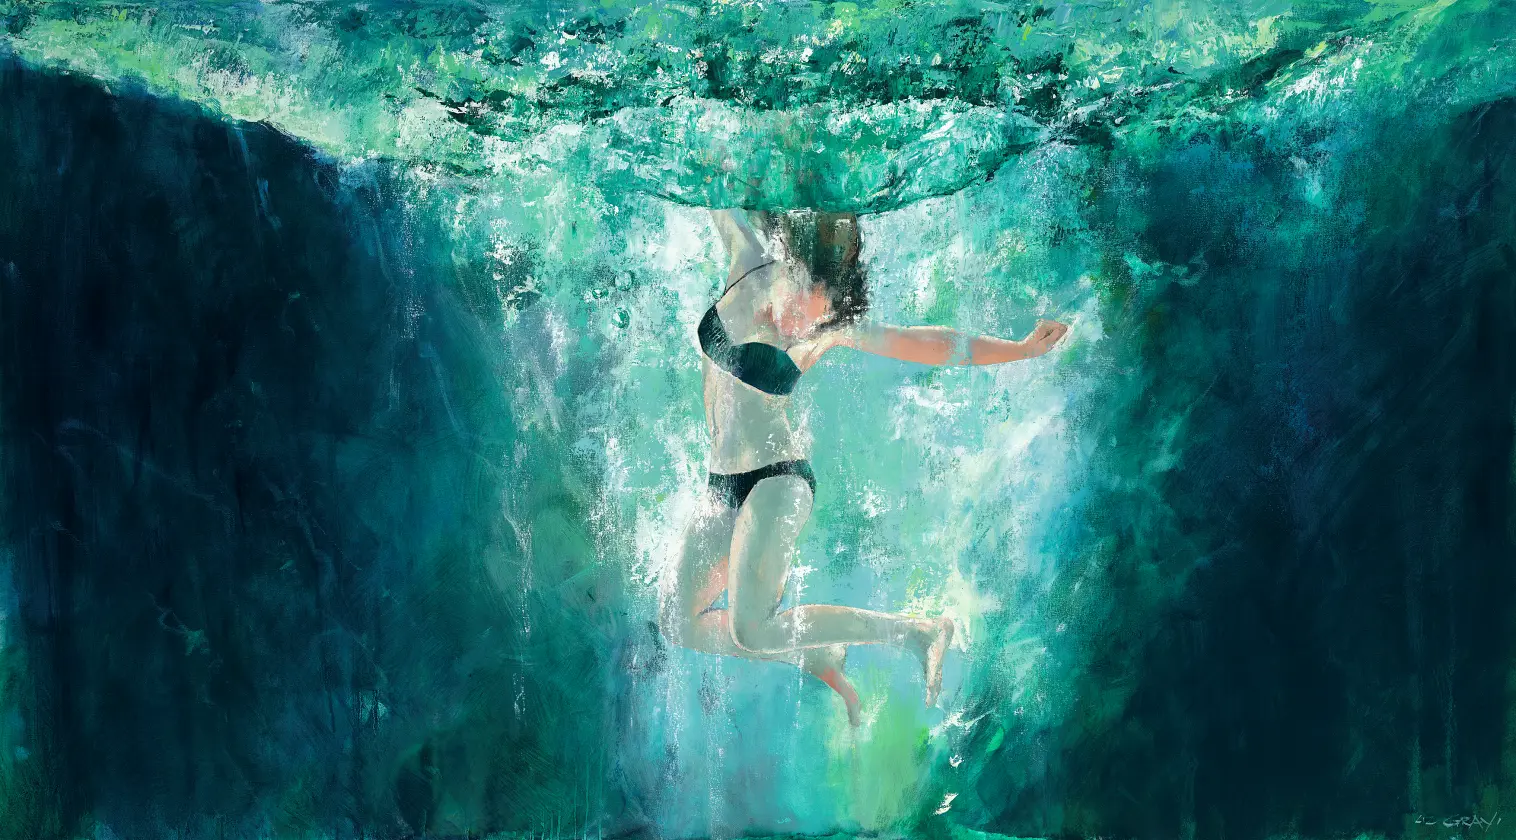 Liz Gray's Iridescence, Oil on canvas, 180 x 110cm